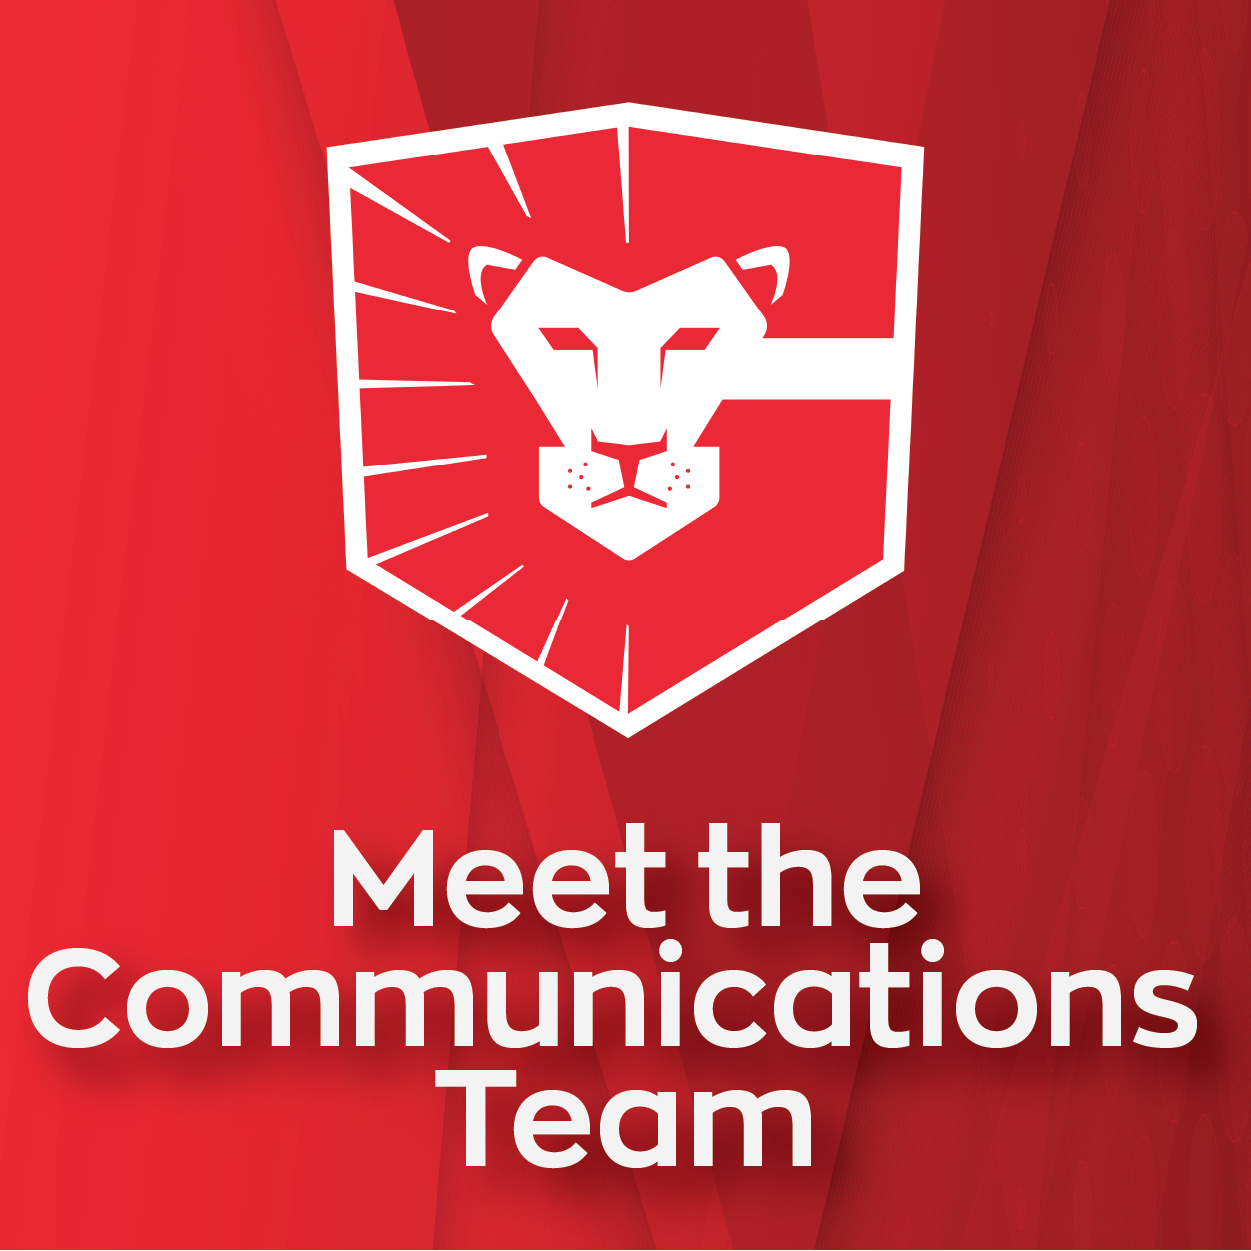  Meet the Communications Team